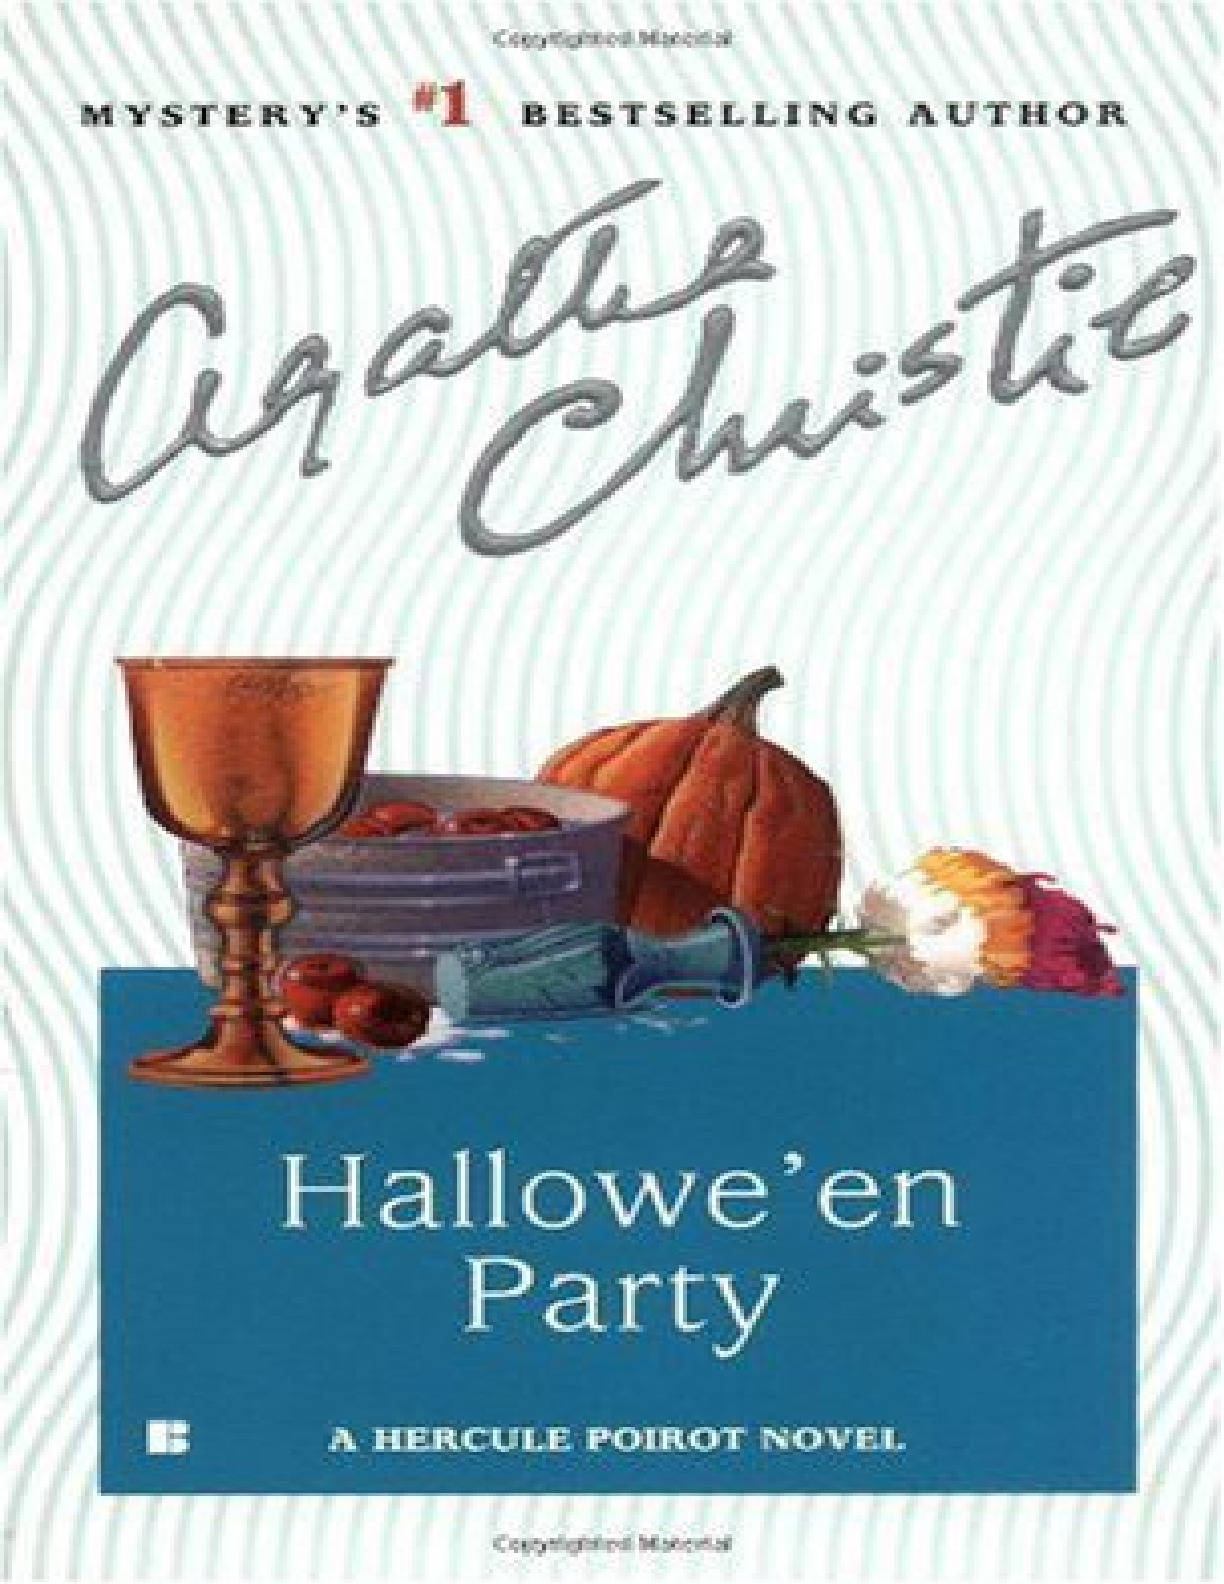 Hallowe’en party – Agatha Christie